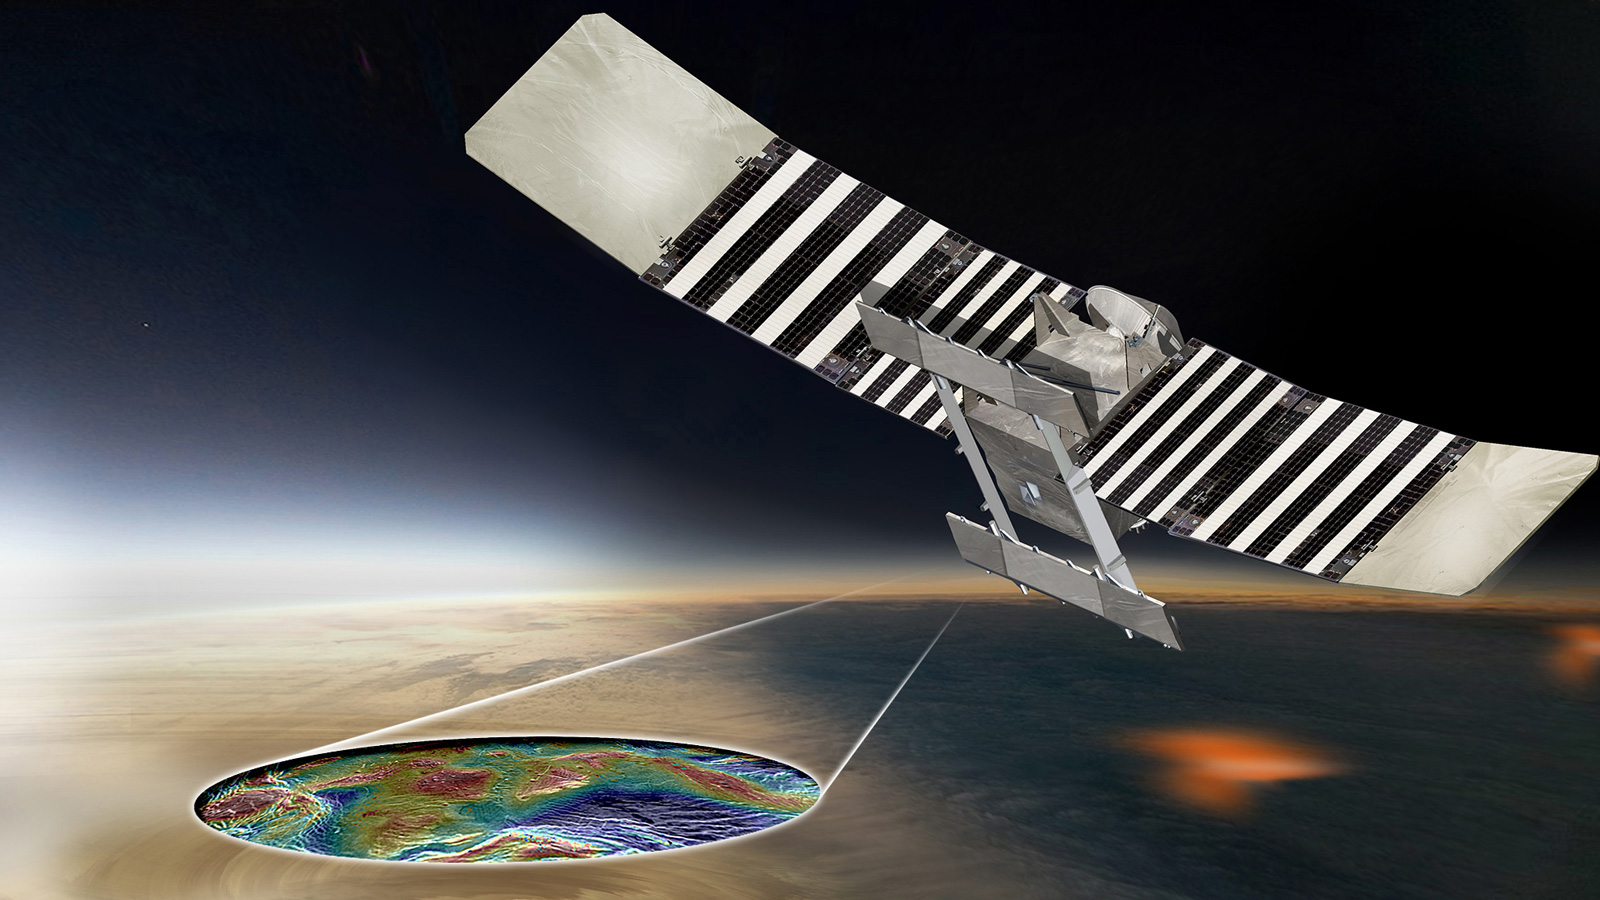 This artist's concept shows the proposed VERITAS spacecraft using its radar